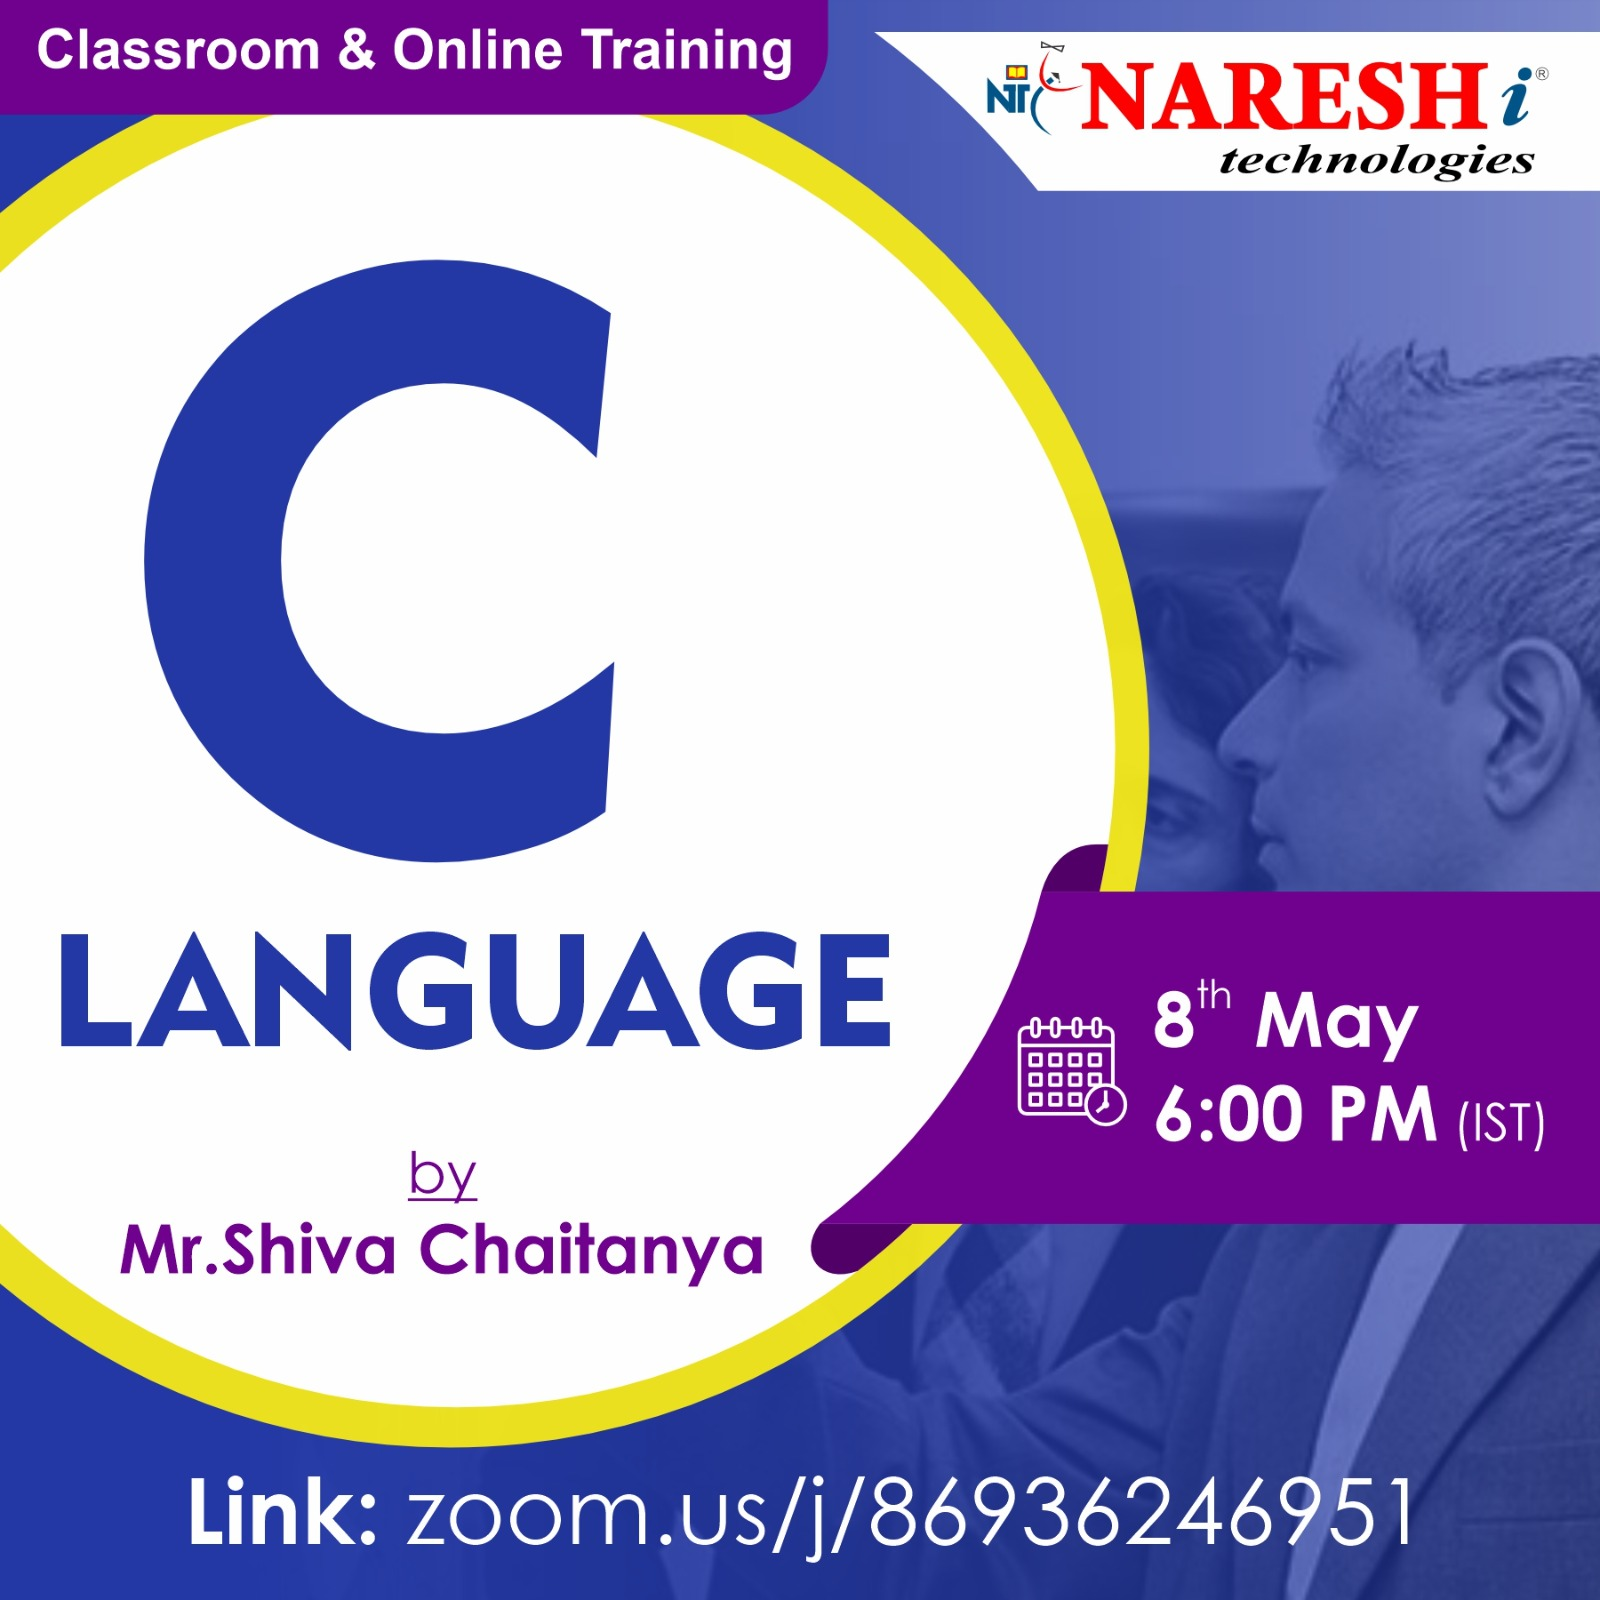 Free Online Demo On C Language by Mr. Shiva Chaitanya | NareshIT, Online Event